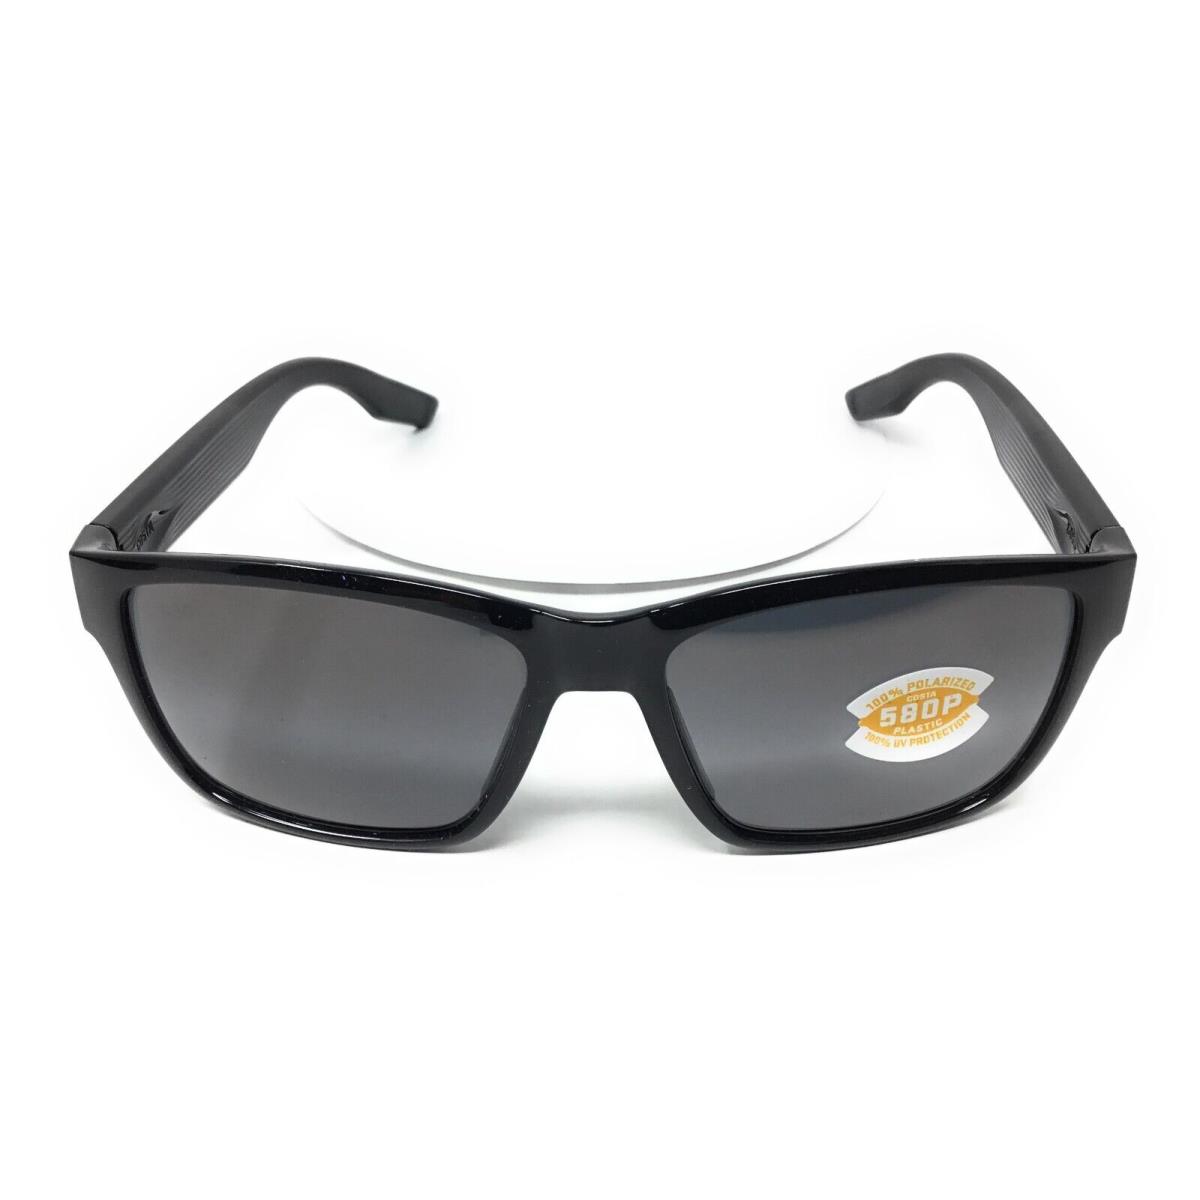 Costa Del Mar Paunch Men`s Gray Gradient Polarized Sunglasses 6S9049 904908 57 - Frame: Black, Lens: Gray